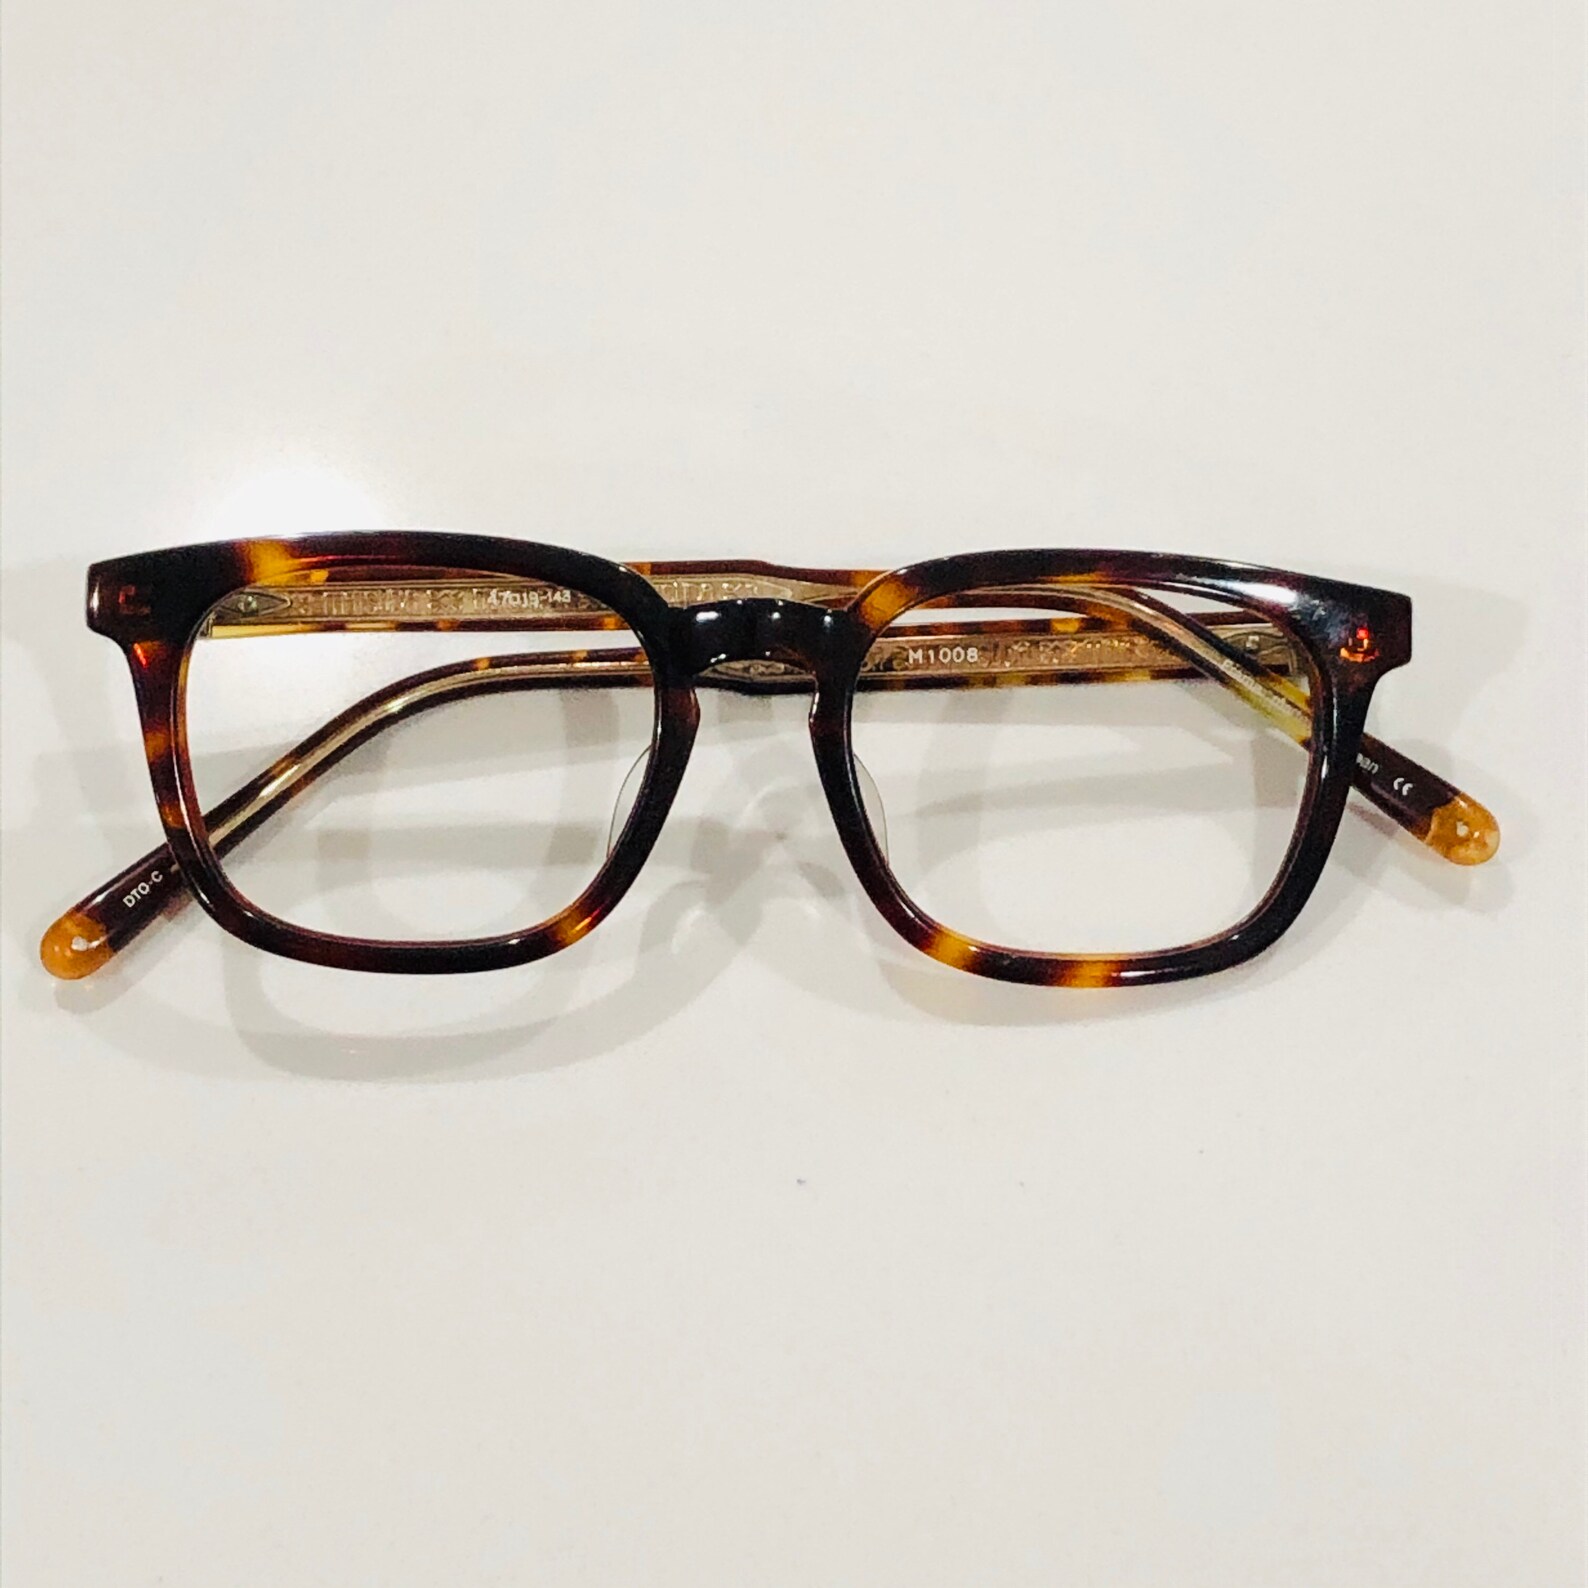 Matsuda Eyeglasses really great looking vintage glasses frames | Etsy